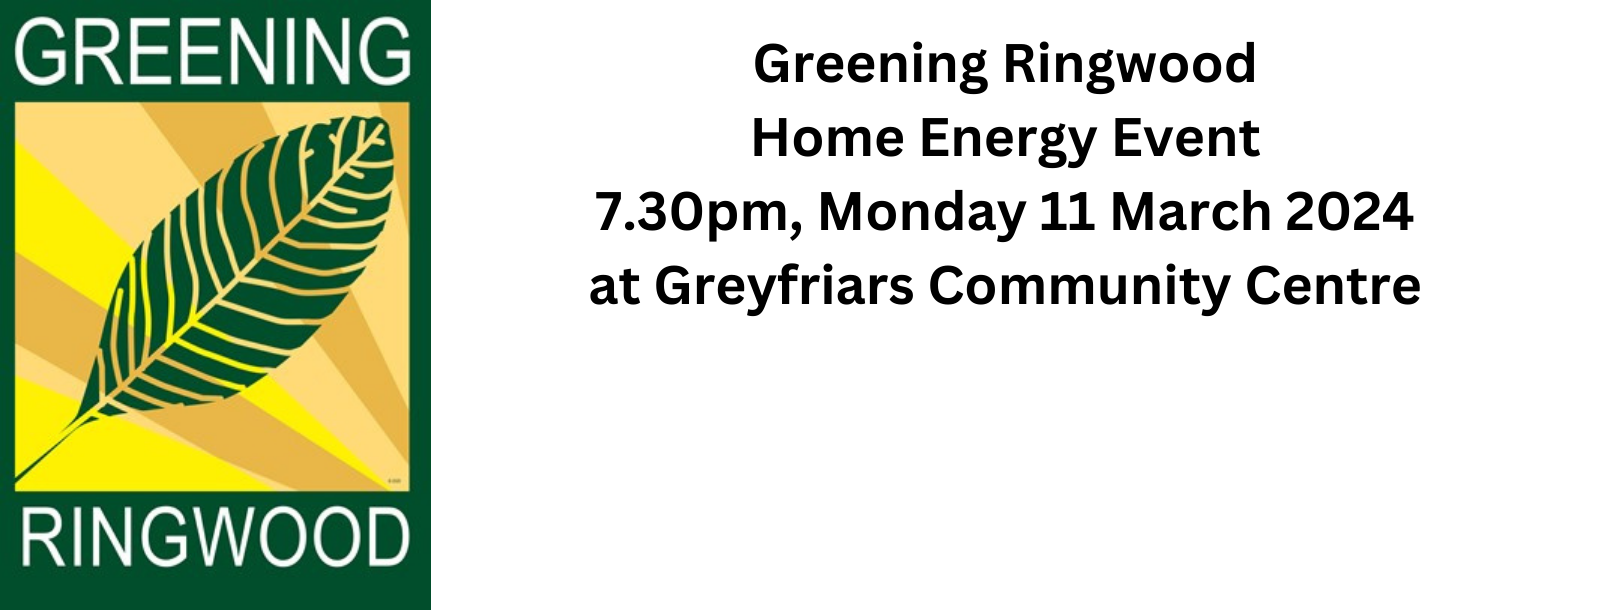 Greening Ringwood - Home Energy Event